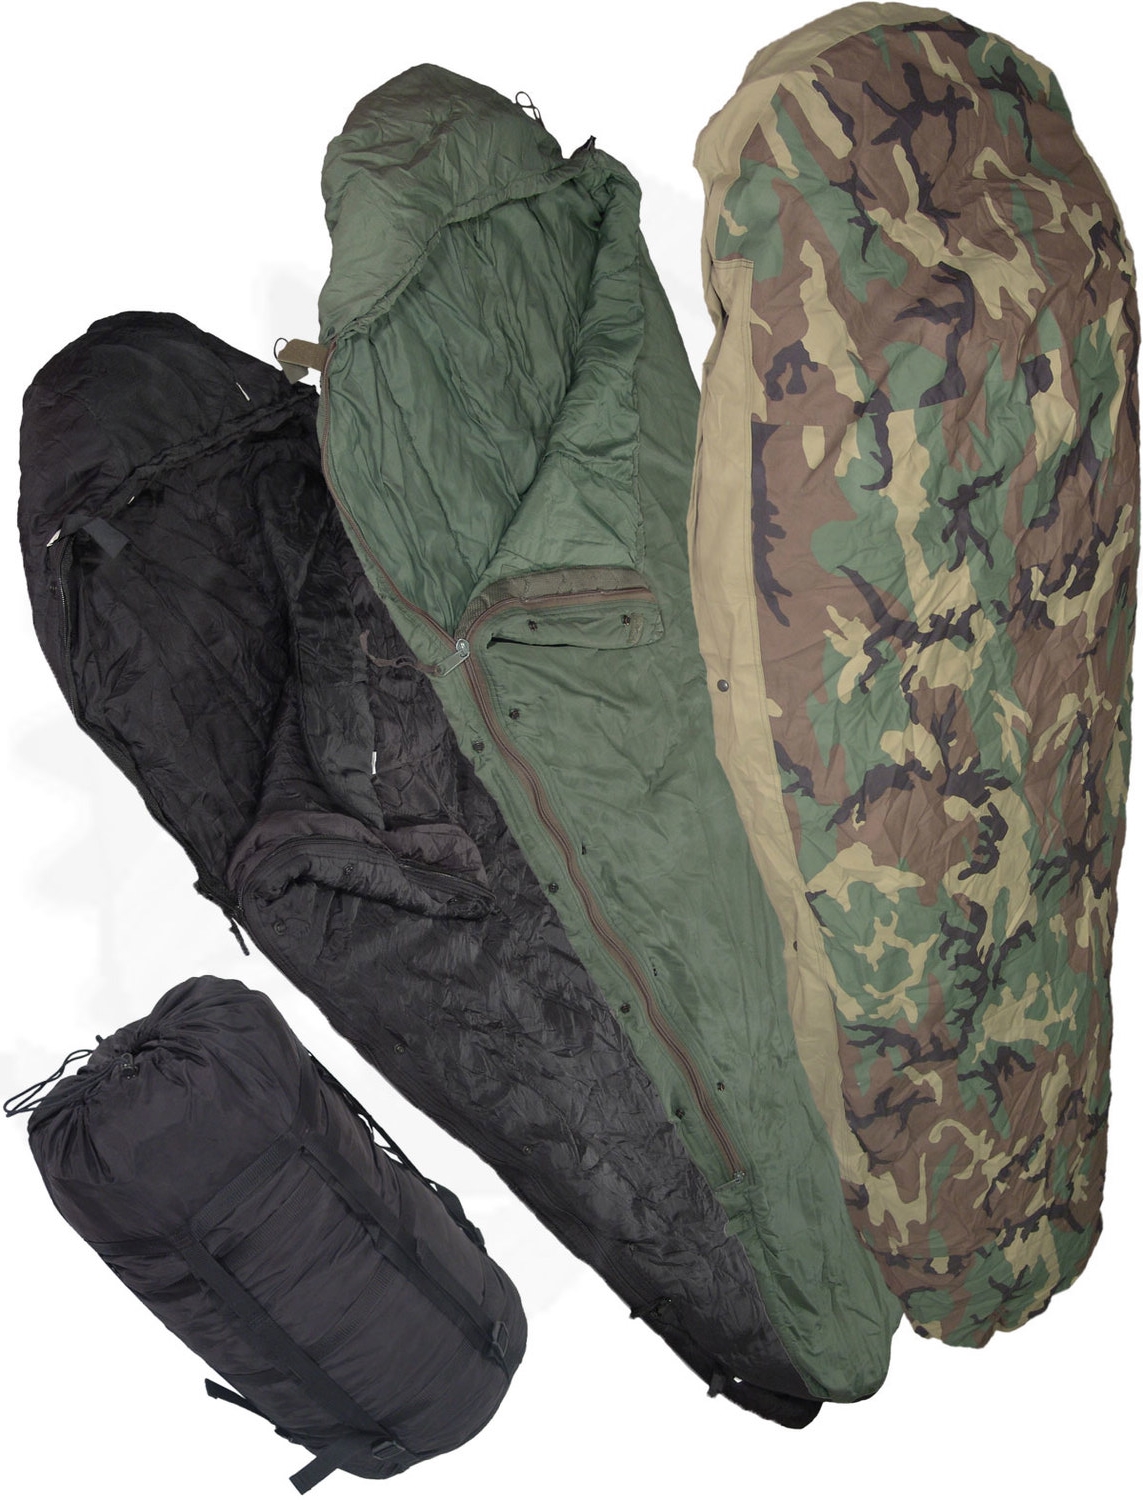 Camouflage Sleeping Bag Military System Us Modular Sleep Cold Woodland Cover 